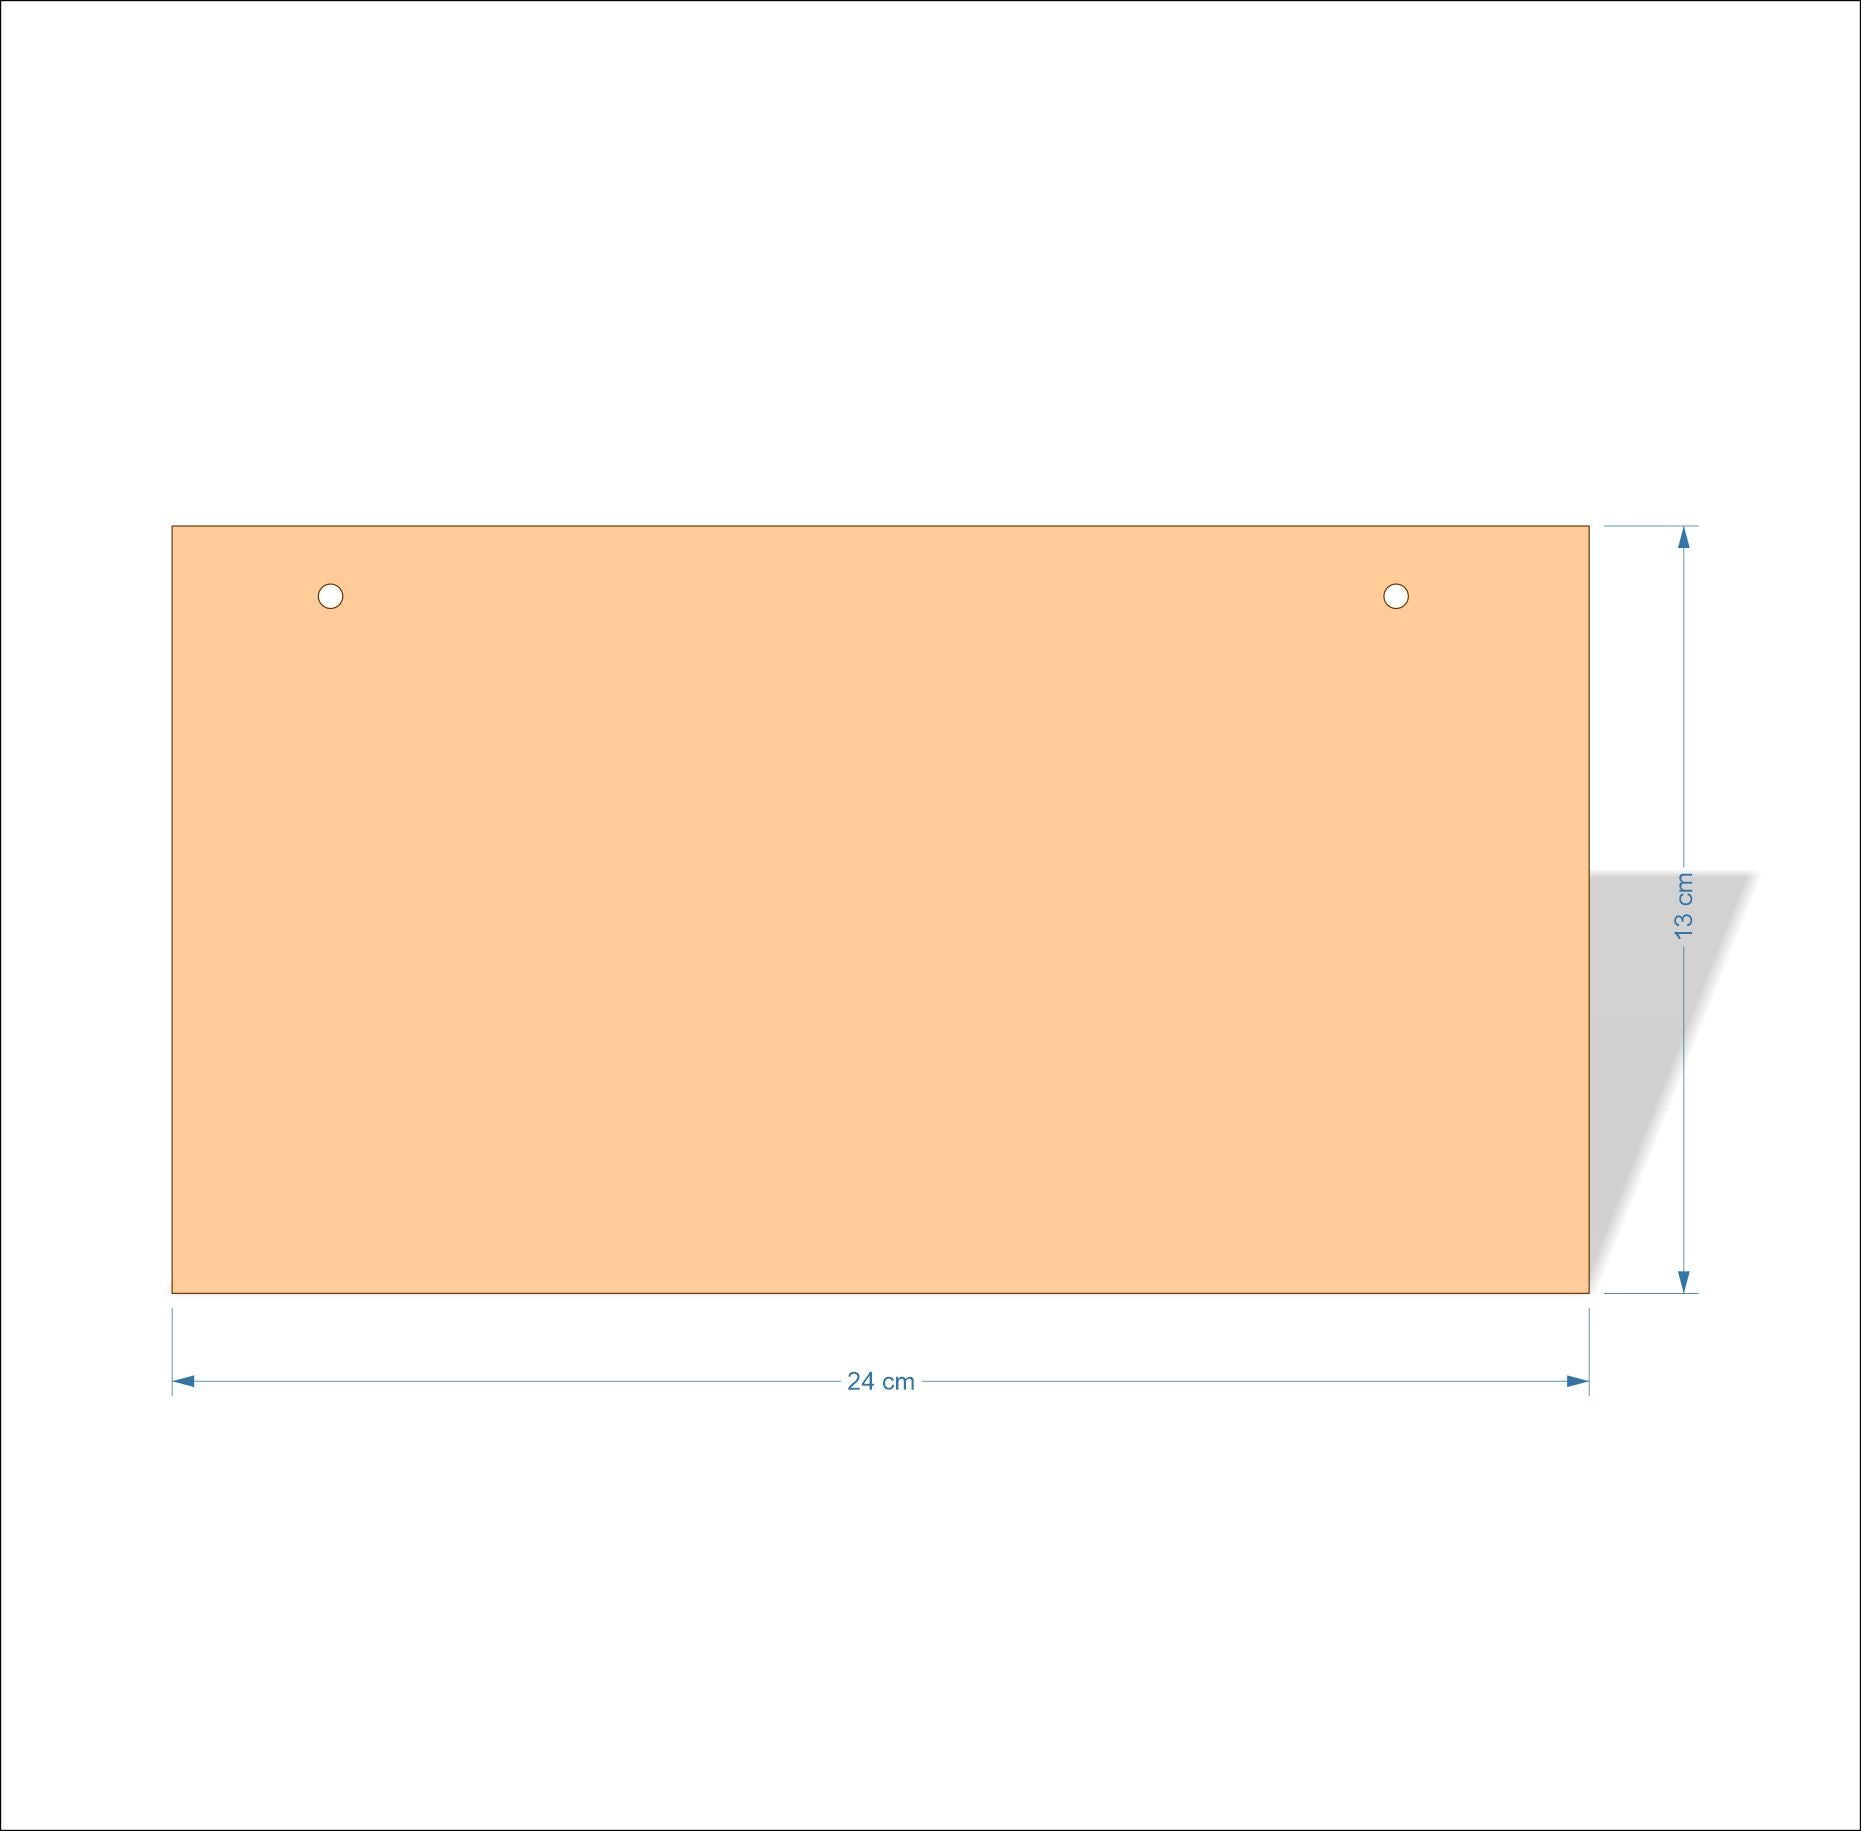 24 cm X 13 cm 3mm MDF Plaques with square corners